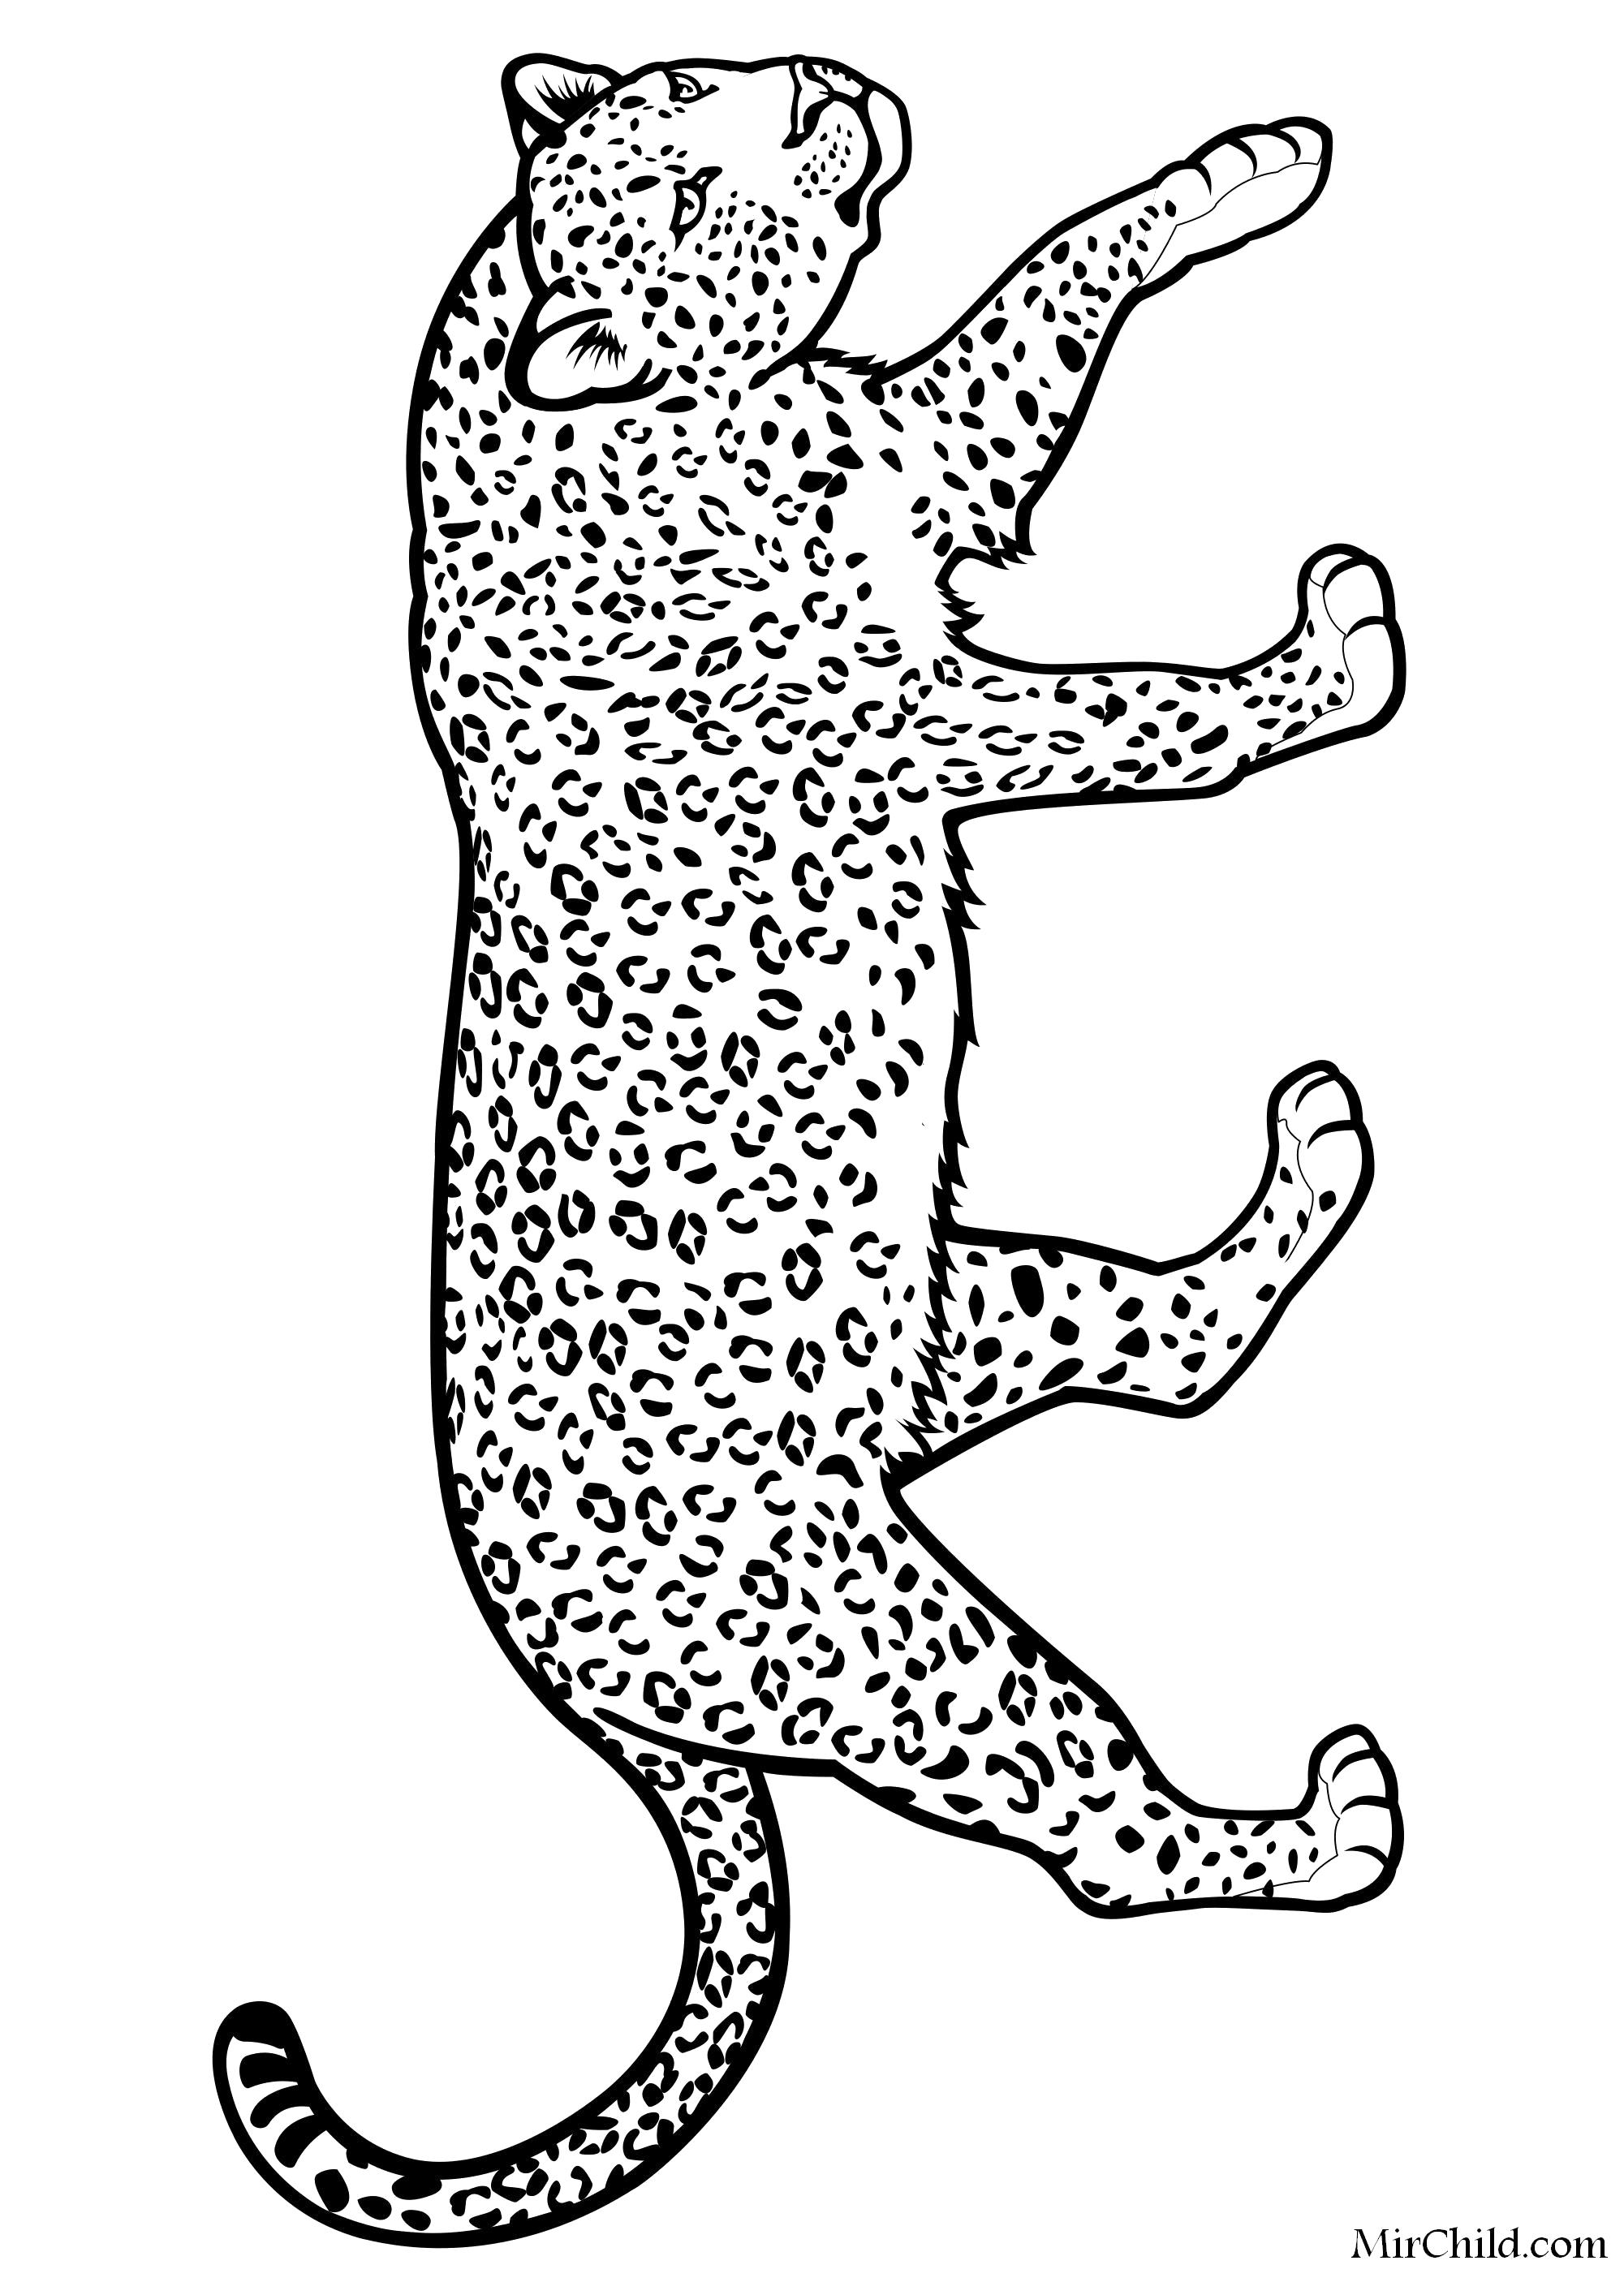 Раскраска Раскраска Леопард. леопард